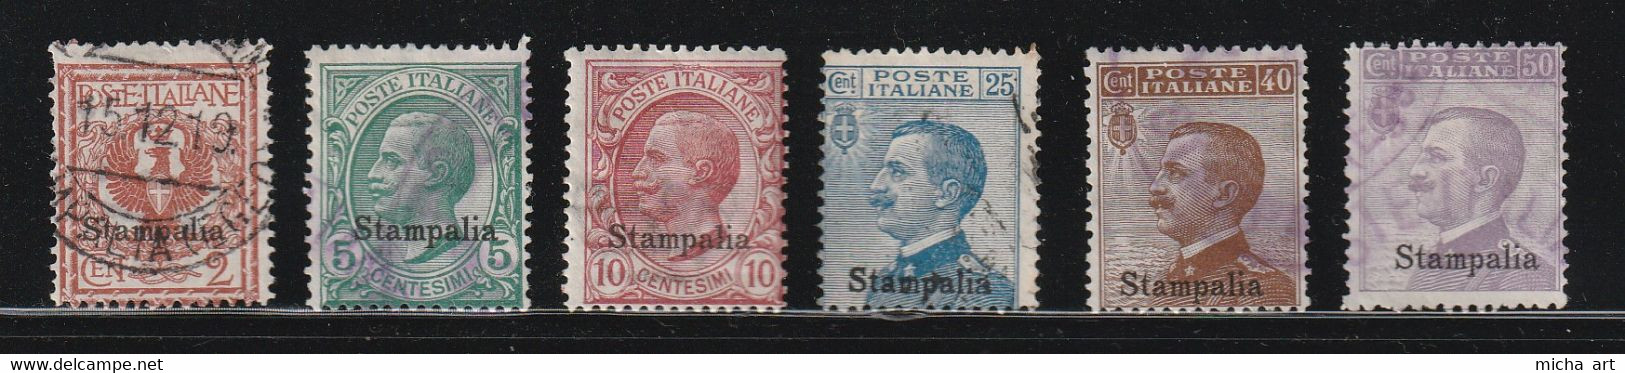 Italian Colonies 1912 Greece Aegean Islands Egeo Stampalia No 1-7 (except 4) Lot Used (B352-25) - Aegean (Stampalia)